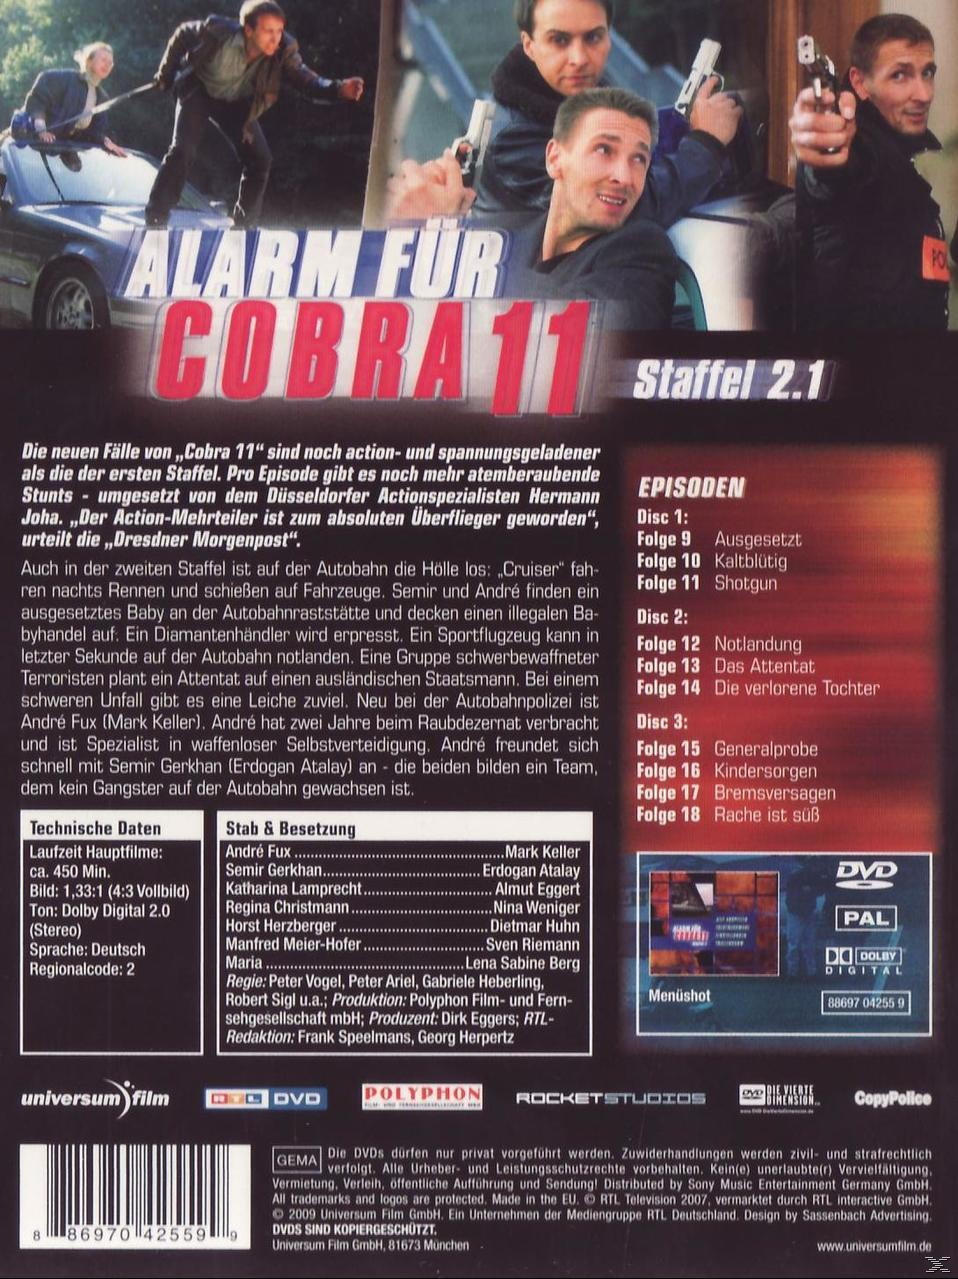 Alarm für Staffel DVD 11 Cobra - 2.1